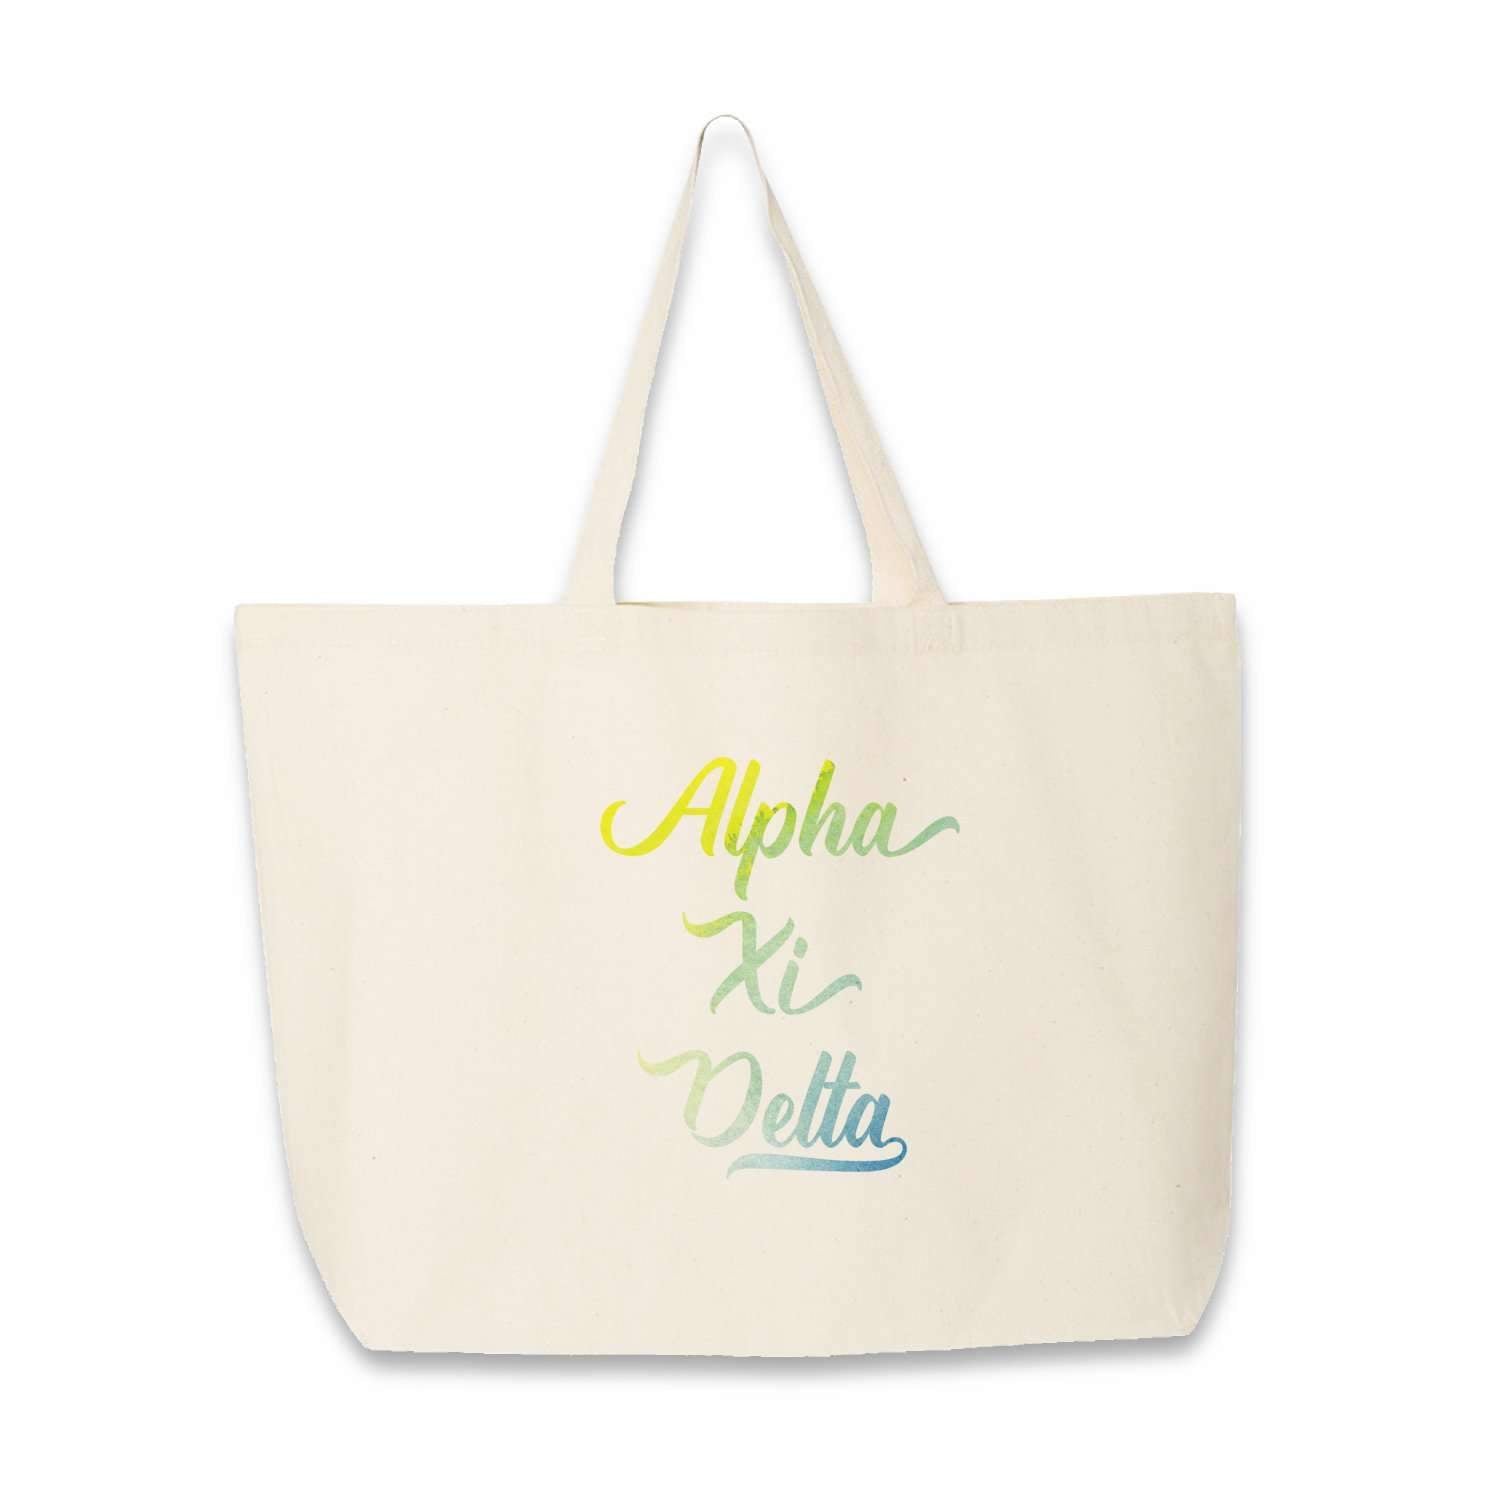 Alpha Xi Delta sorority name custom printed on canvas tote bag